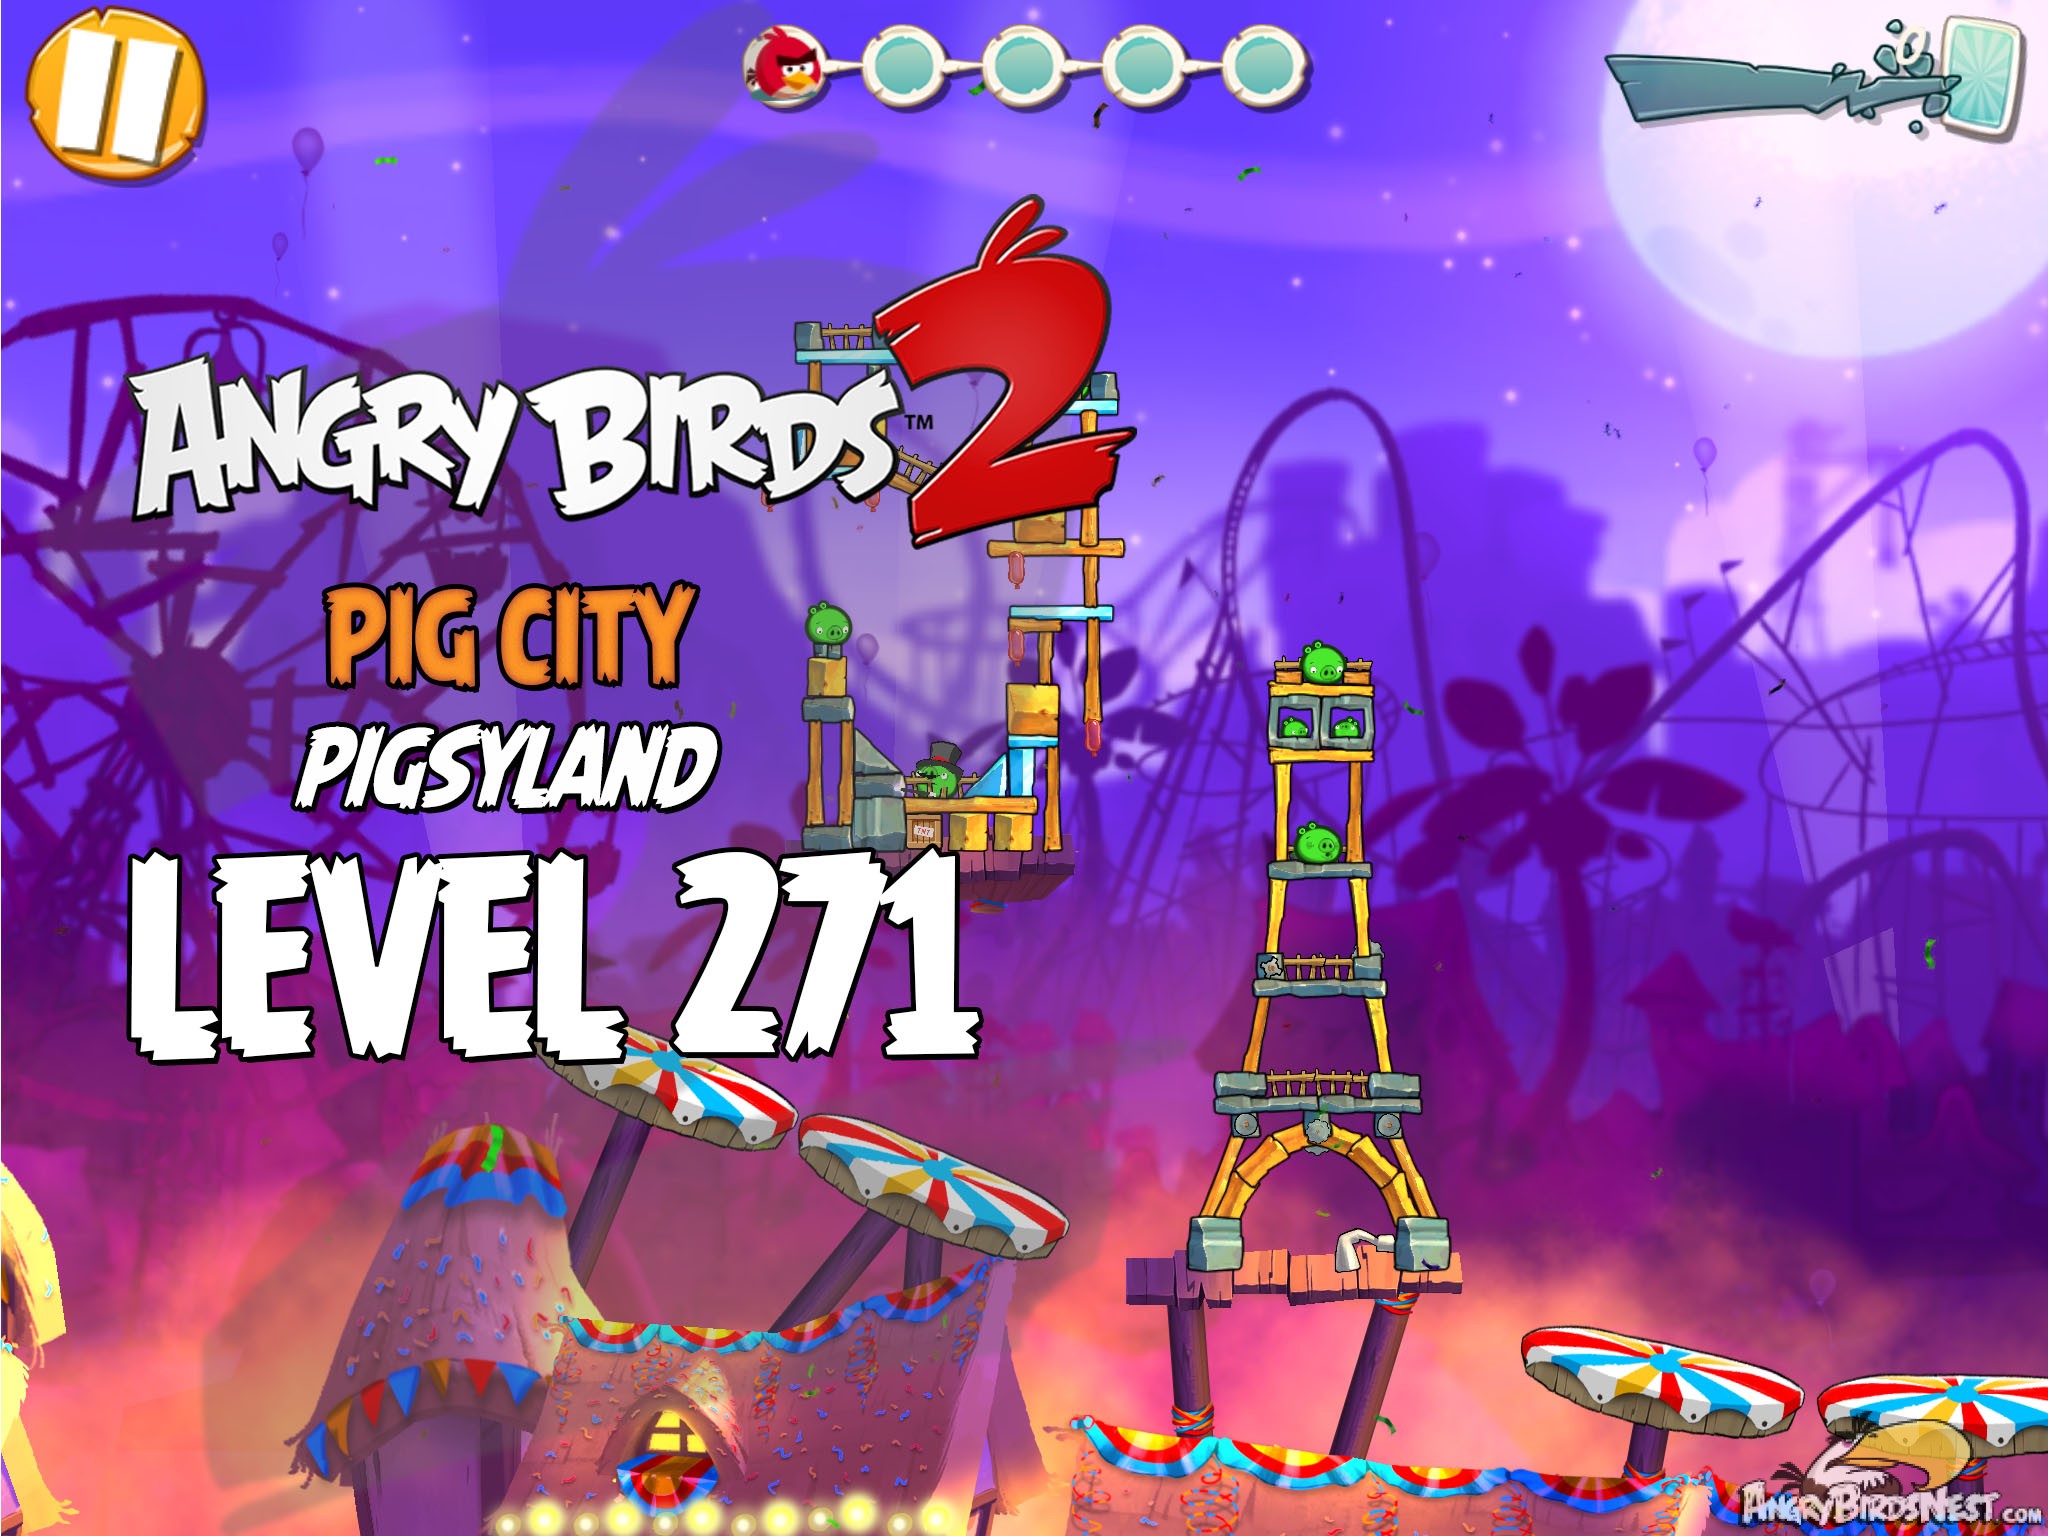 Angry Birds 2 Pig City Pigsyland Level 271